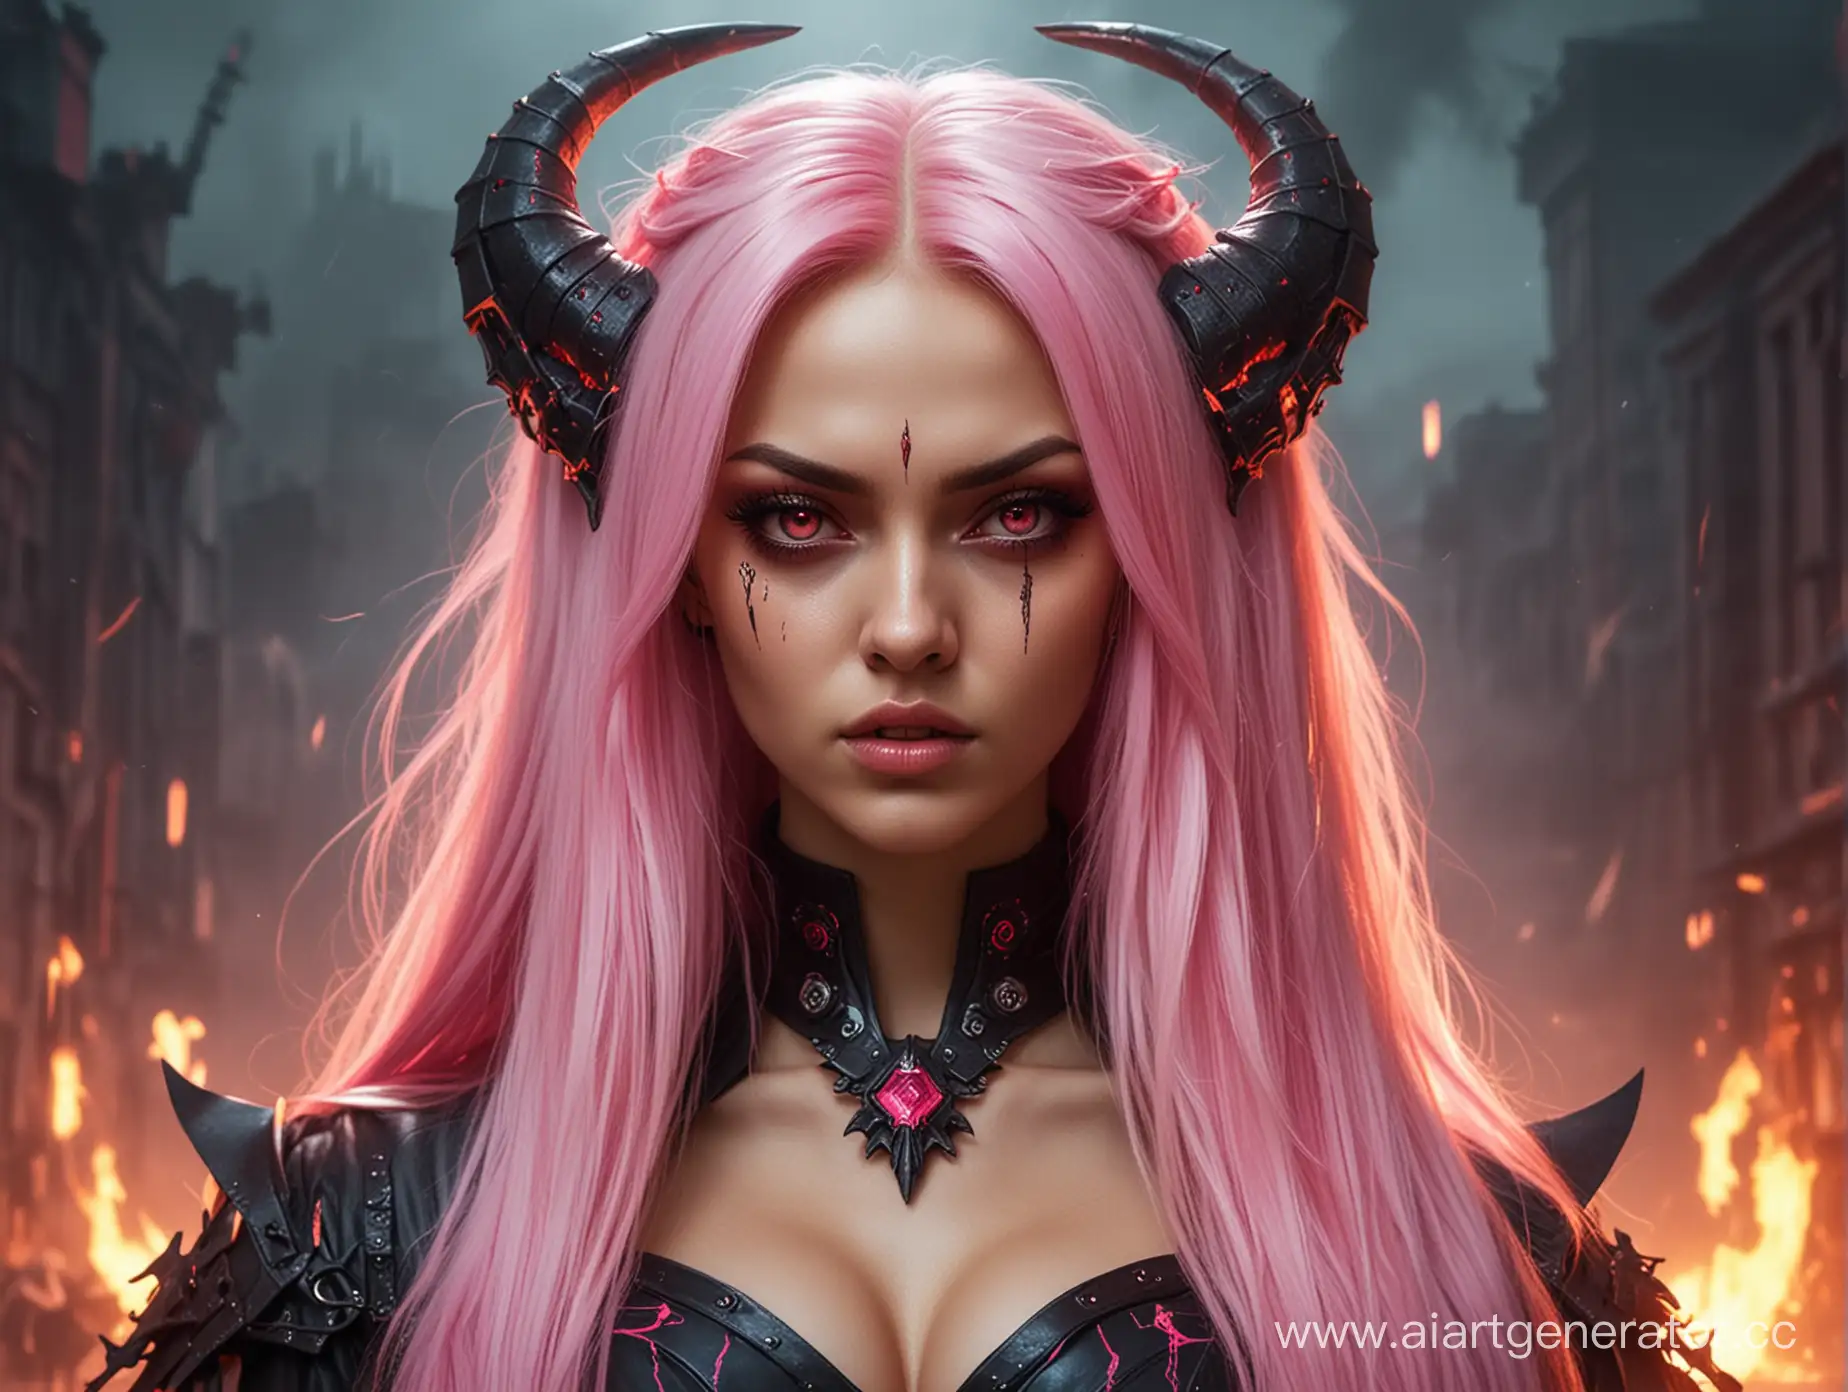 Fierce-Cyberpunk-Goddess-Russian-Vampire-with-Pink-Hair-and-SWITAshMIMI-Eyes